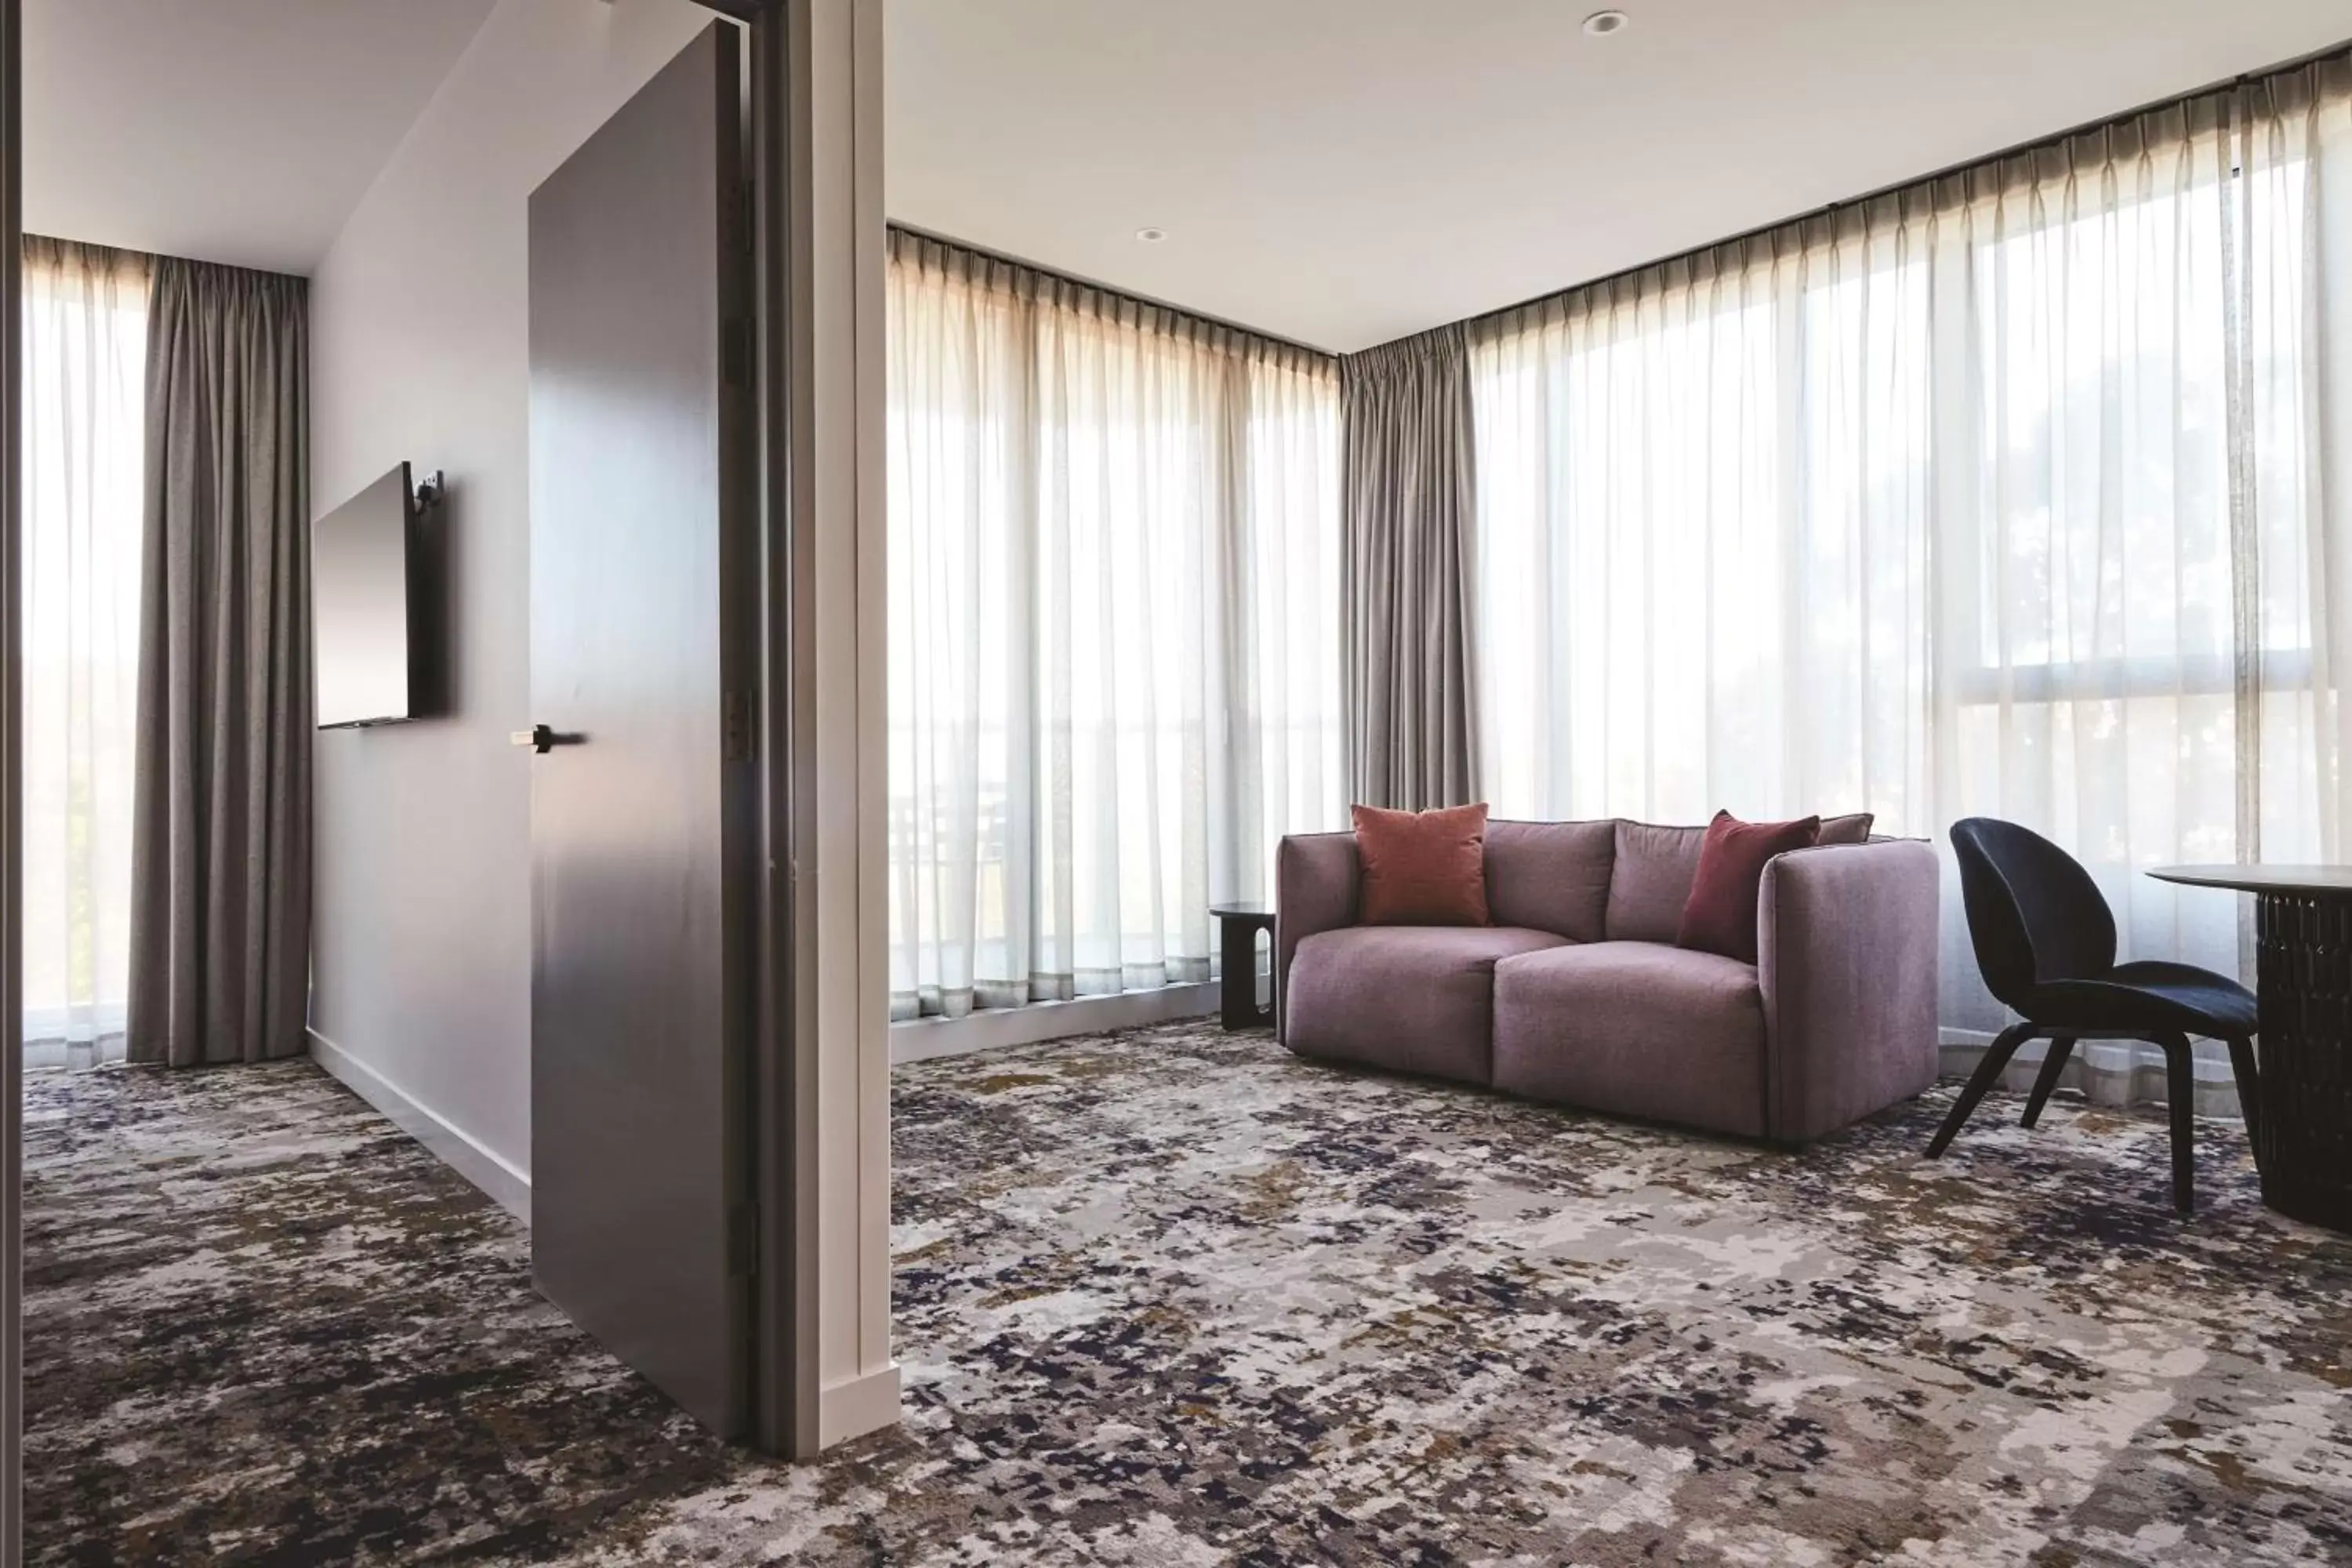 Bedroom, Seating Area in Adina Apartment Hotel Melbourne, Pentridge